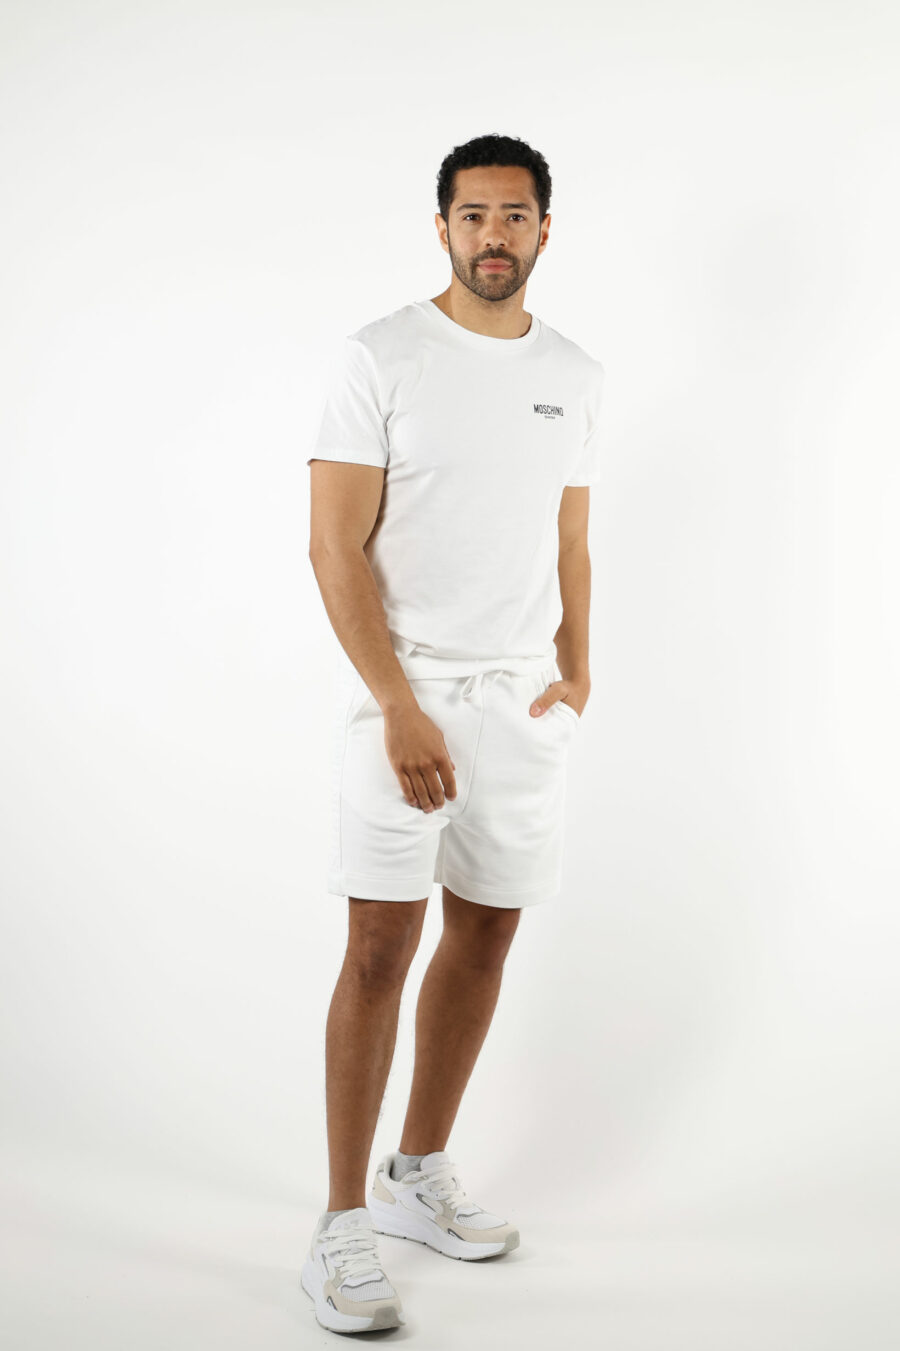 Camiseta blanca con minilogo "swim" - 111085